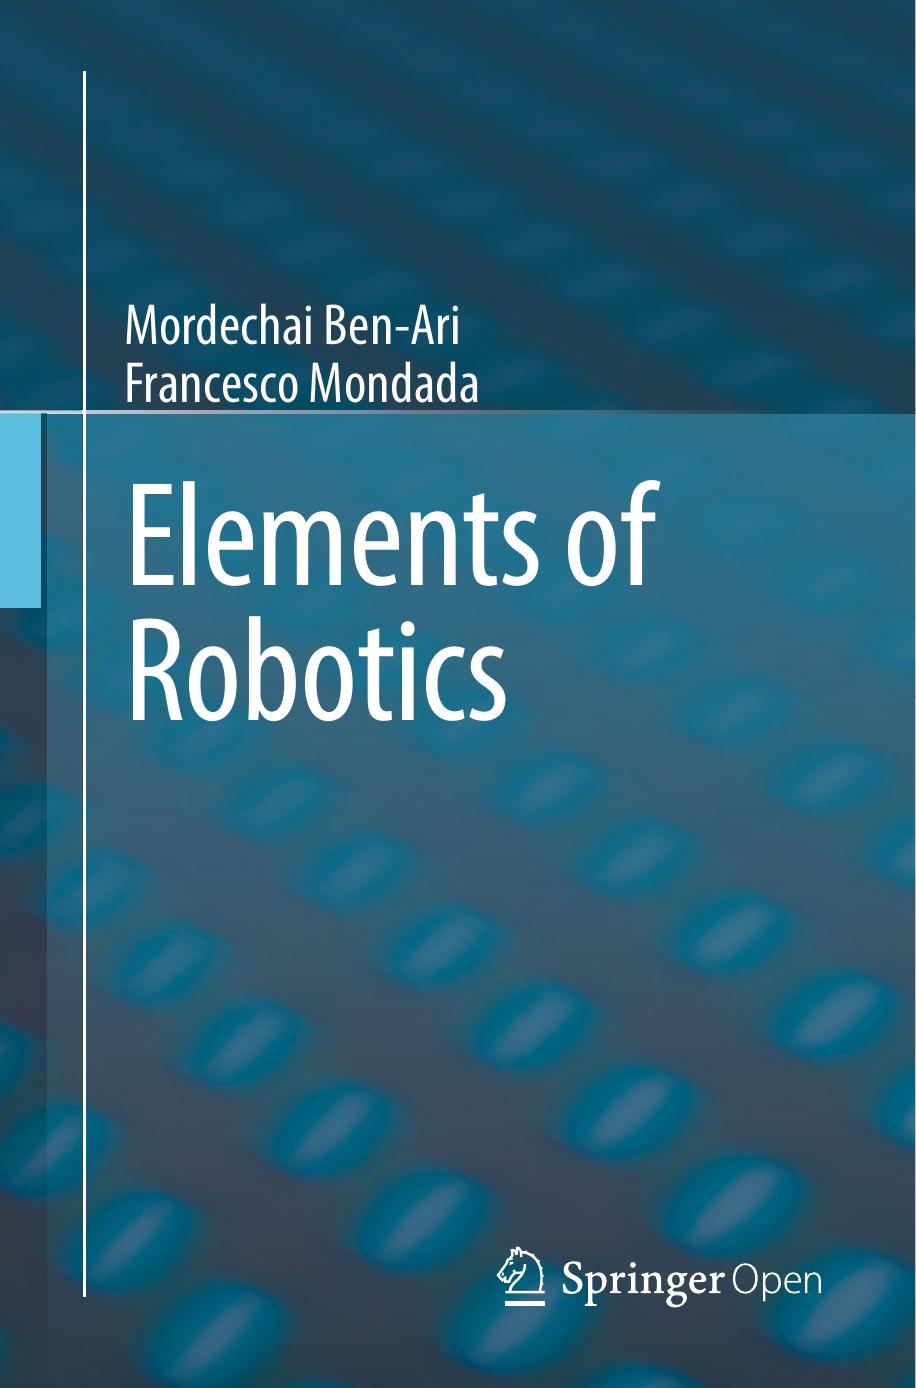 Elements of Robotics by Mordechai Ben-Ari & Francesco Mondada